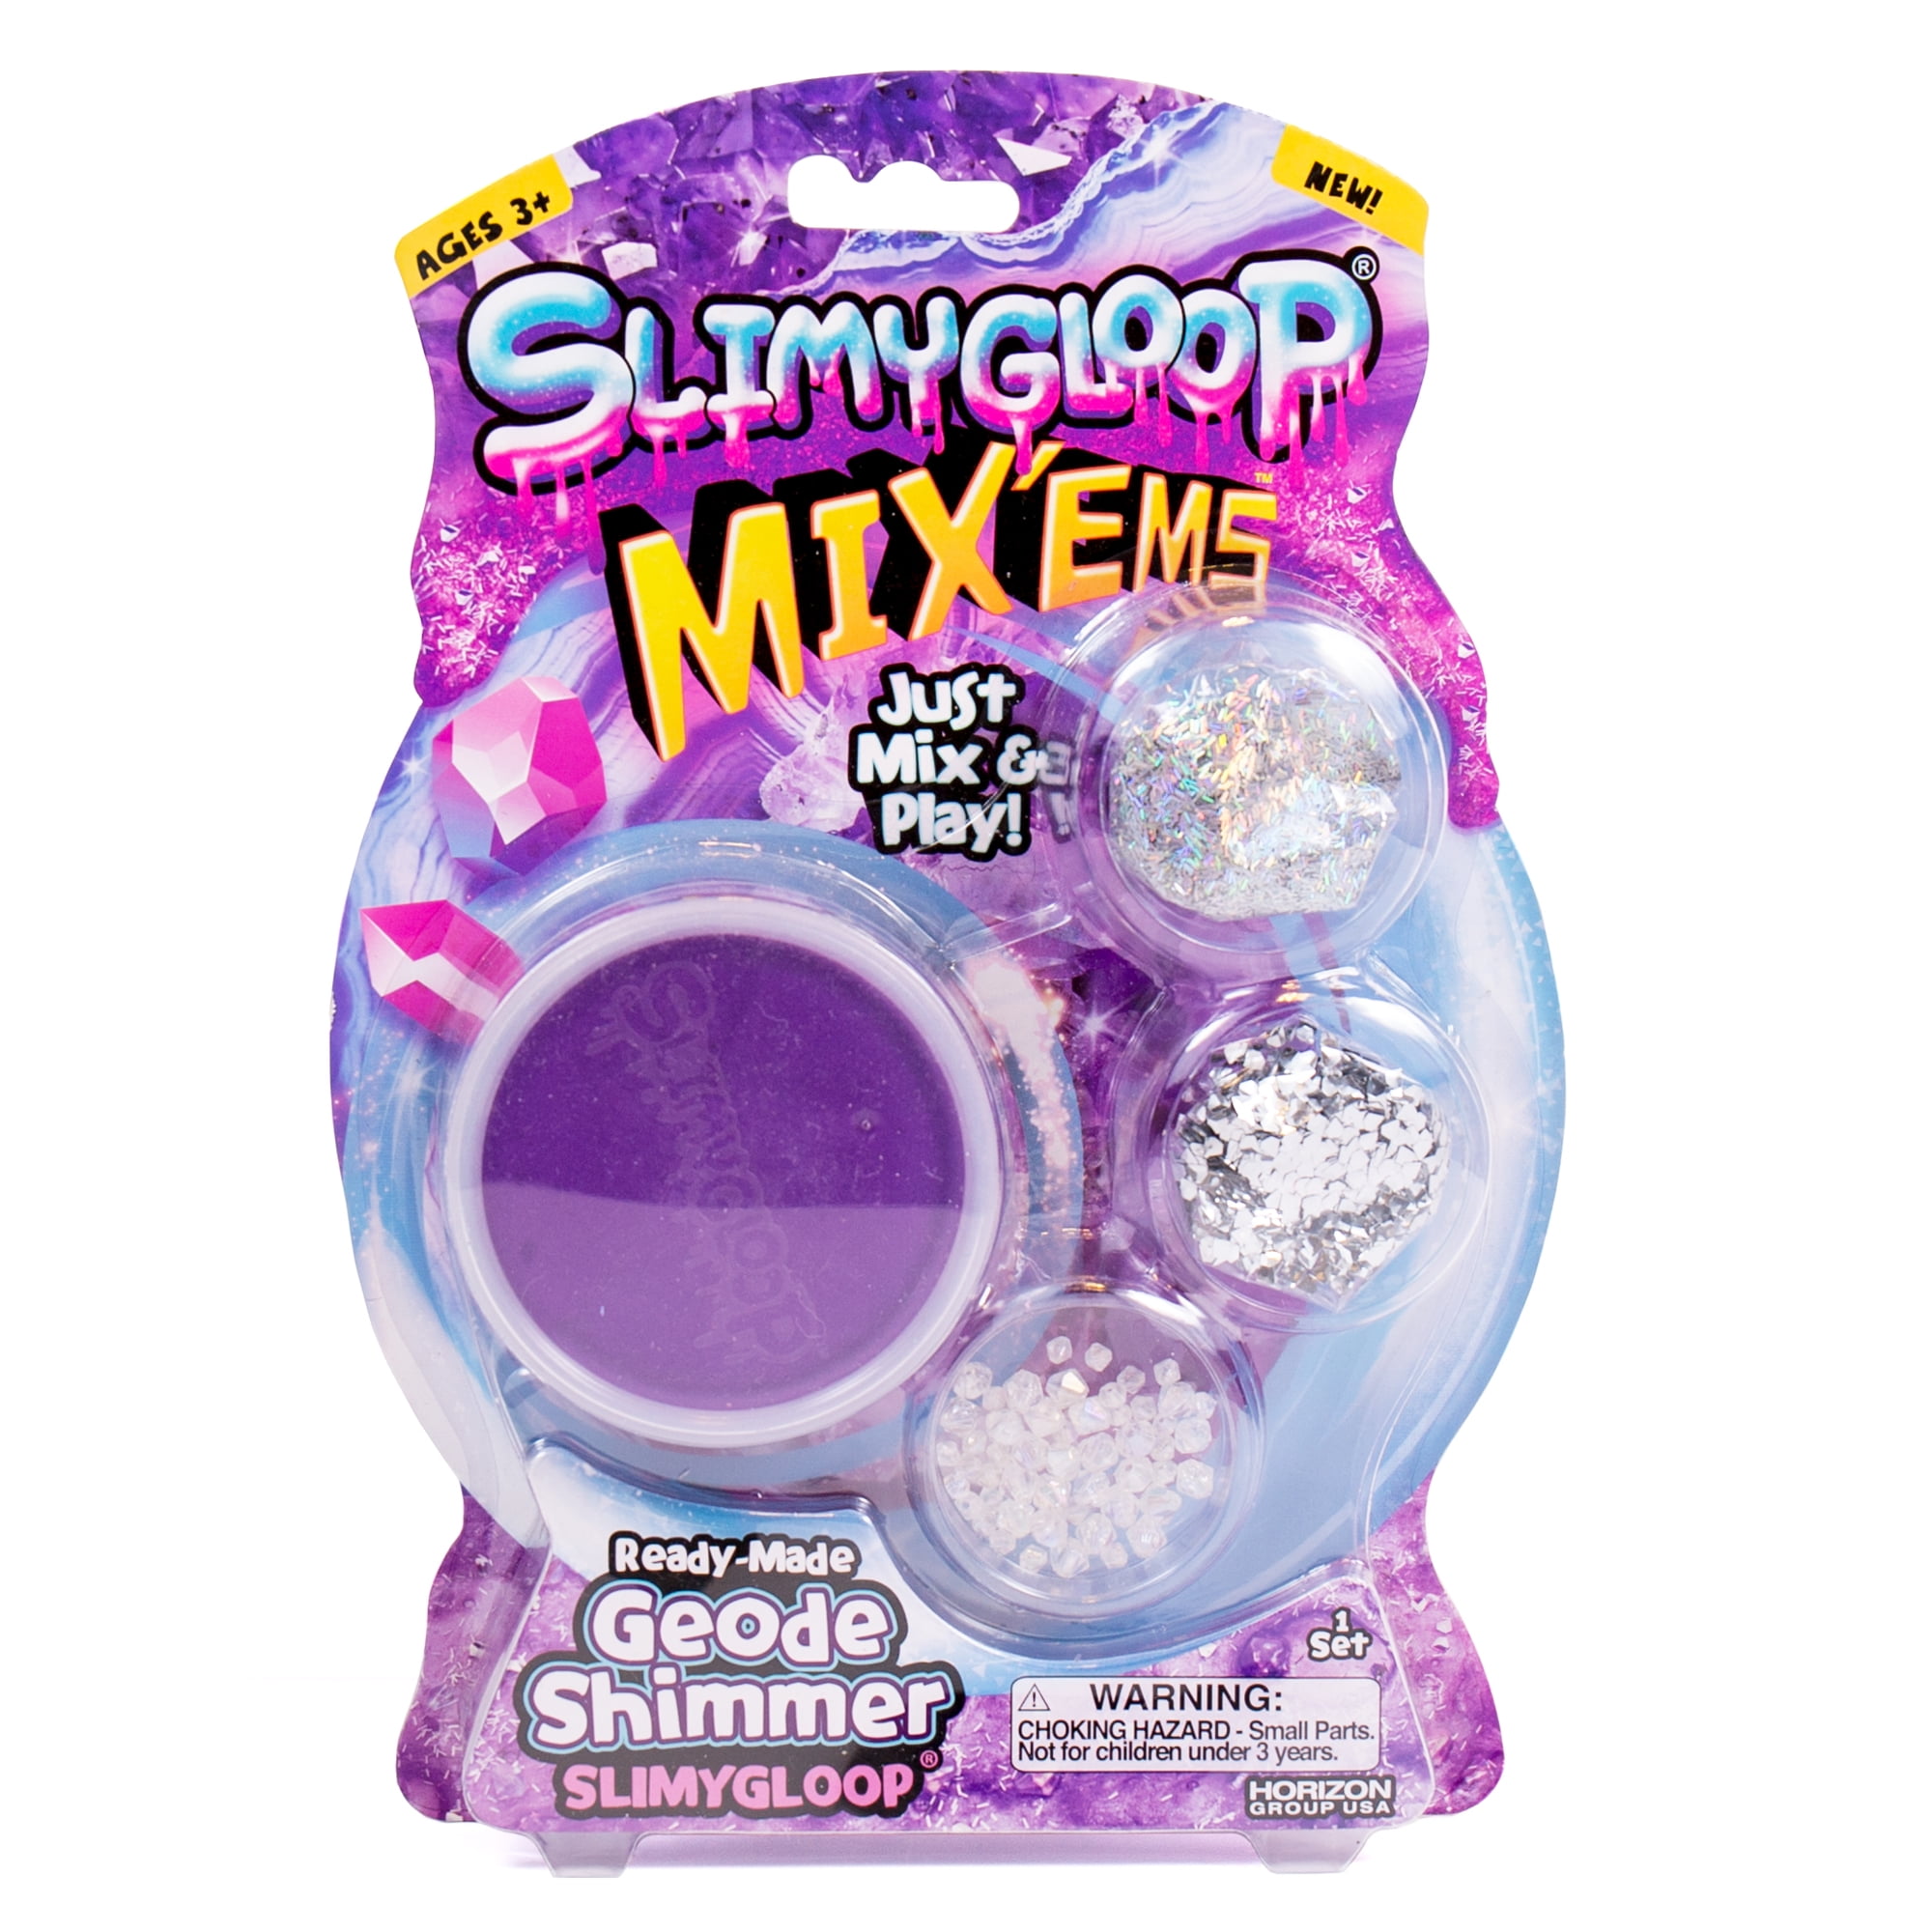 DIY Slime Maker Glitter Game by Tik Tok